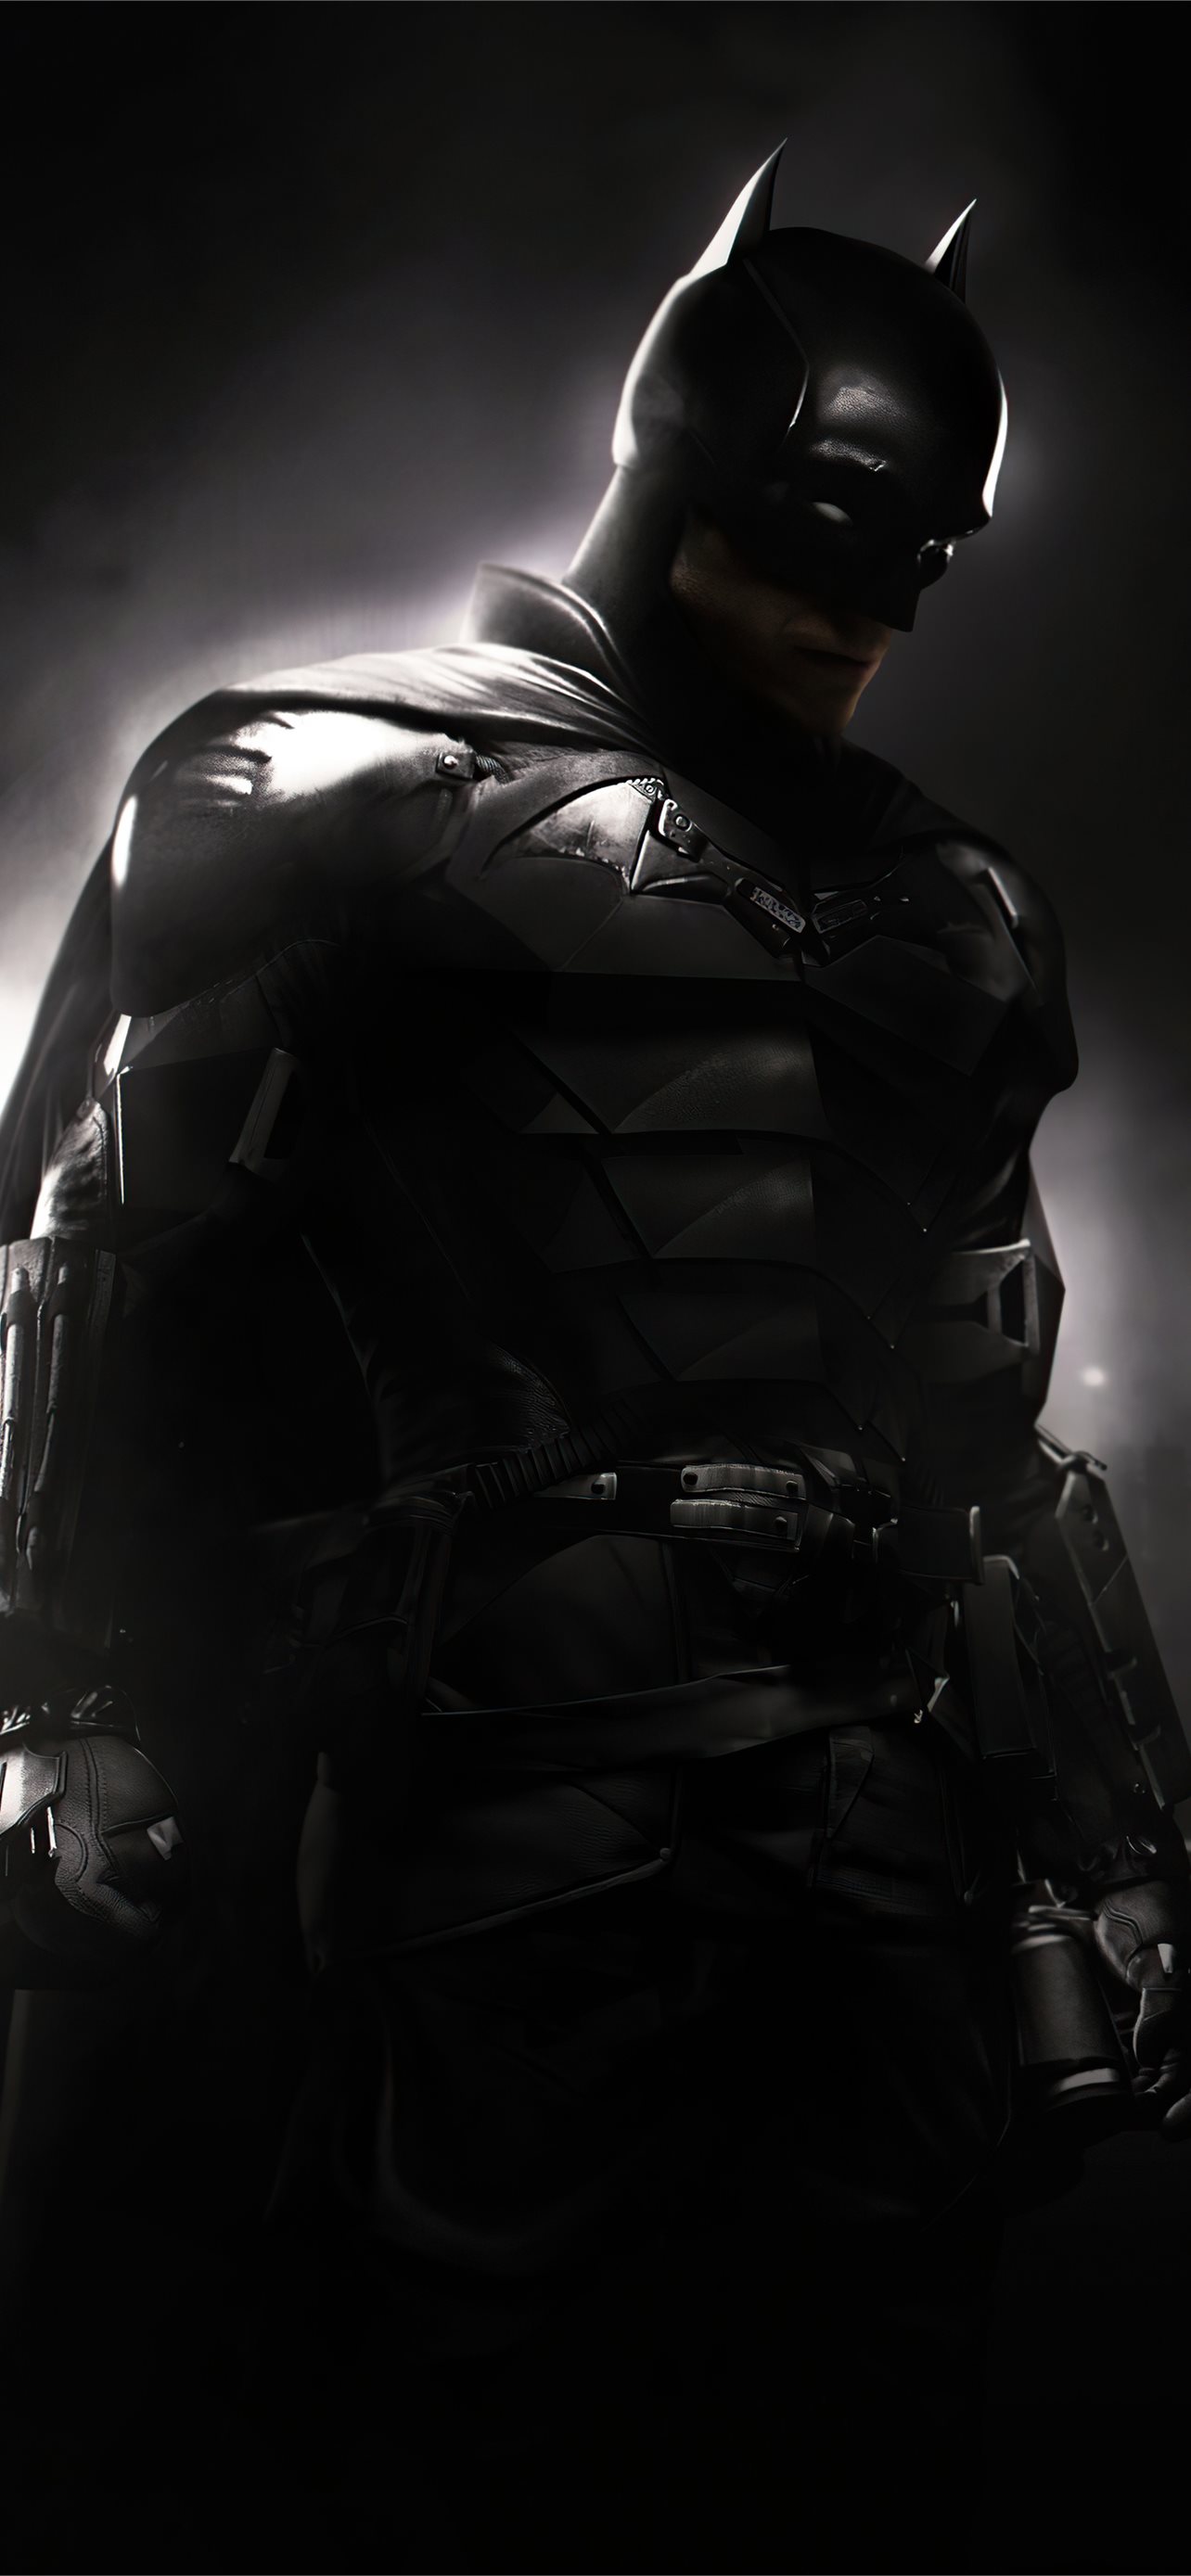 robert pattinson the batman suit 4k iPhone Wallpapers Free Download